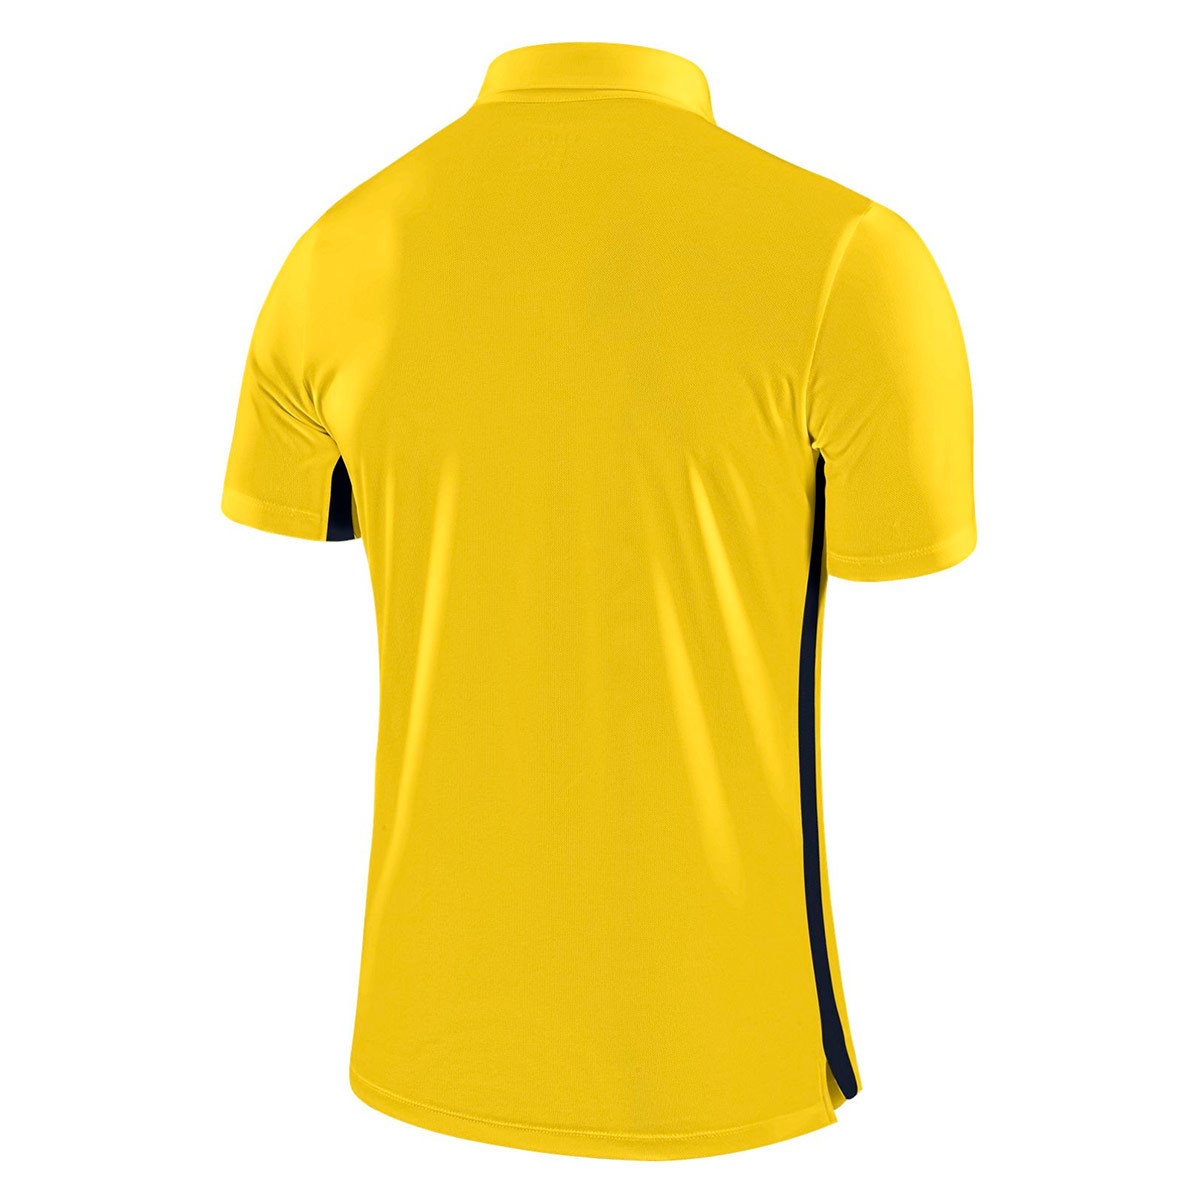 black and yellow nike shirt